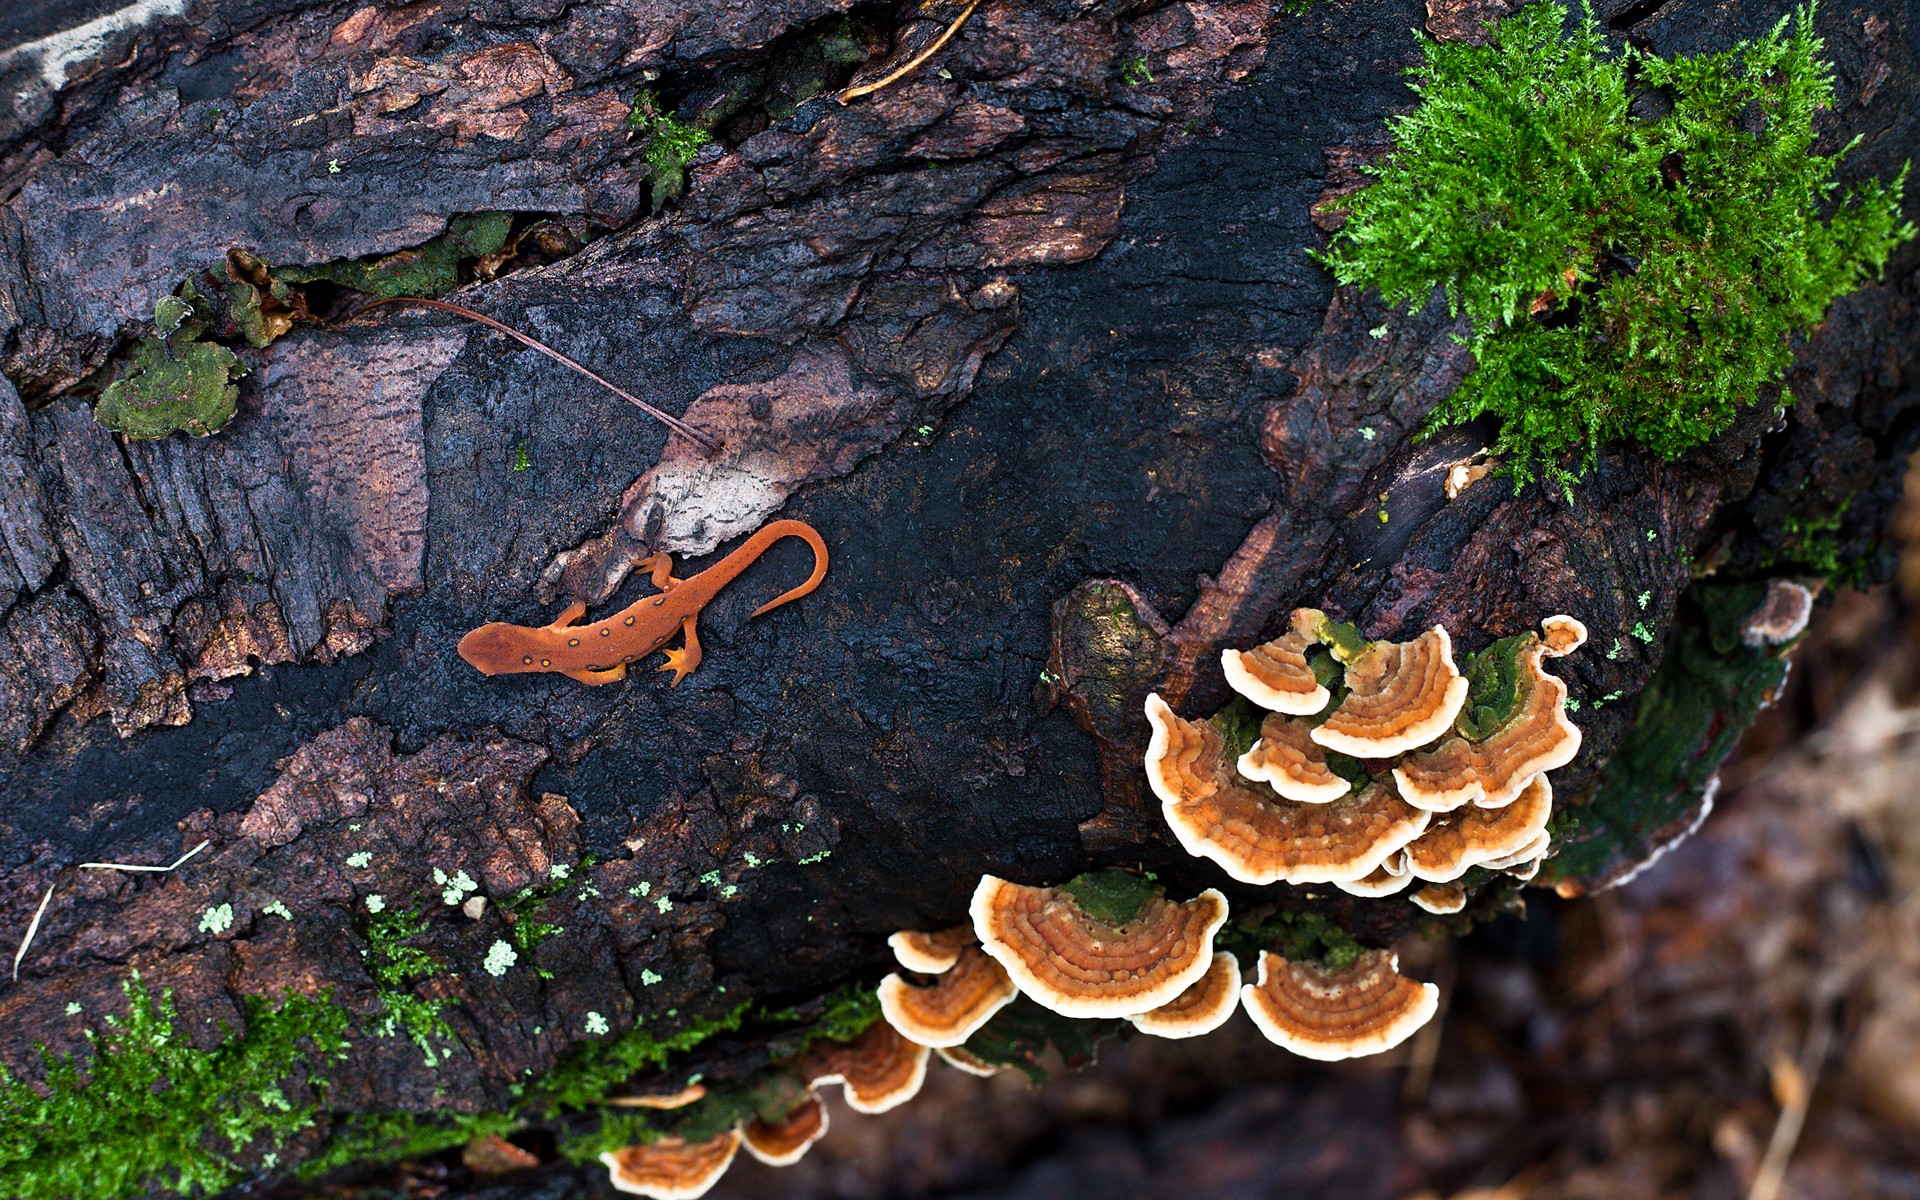 mushrooms, lizards - desktop wallpaper